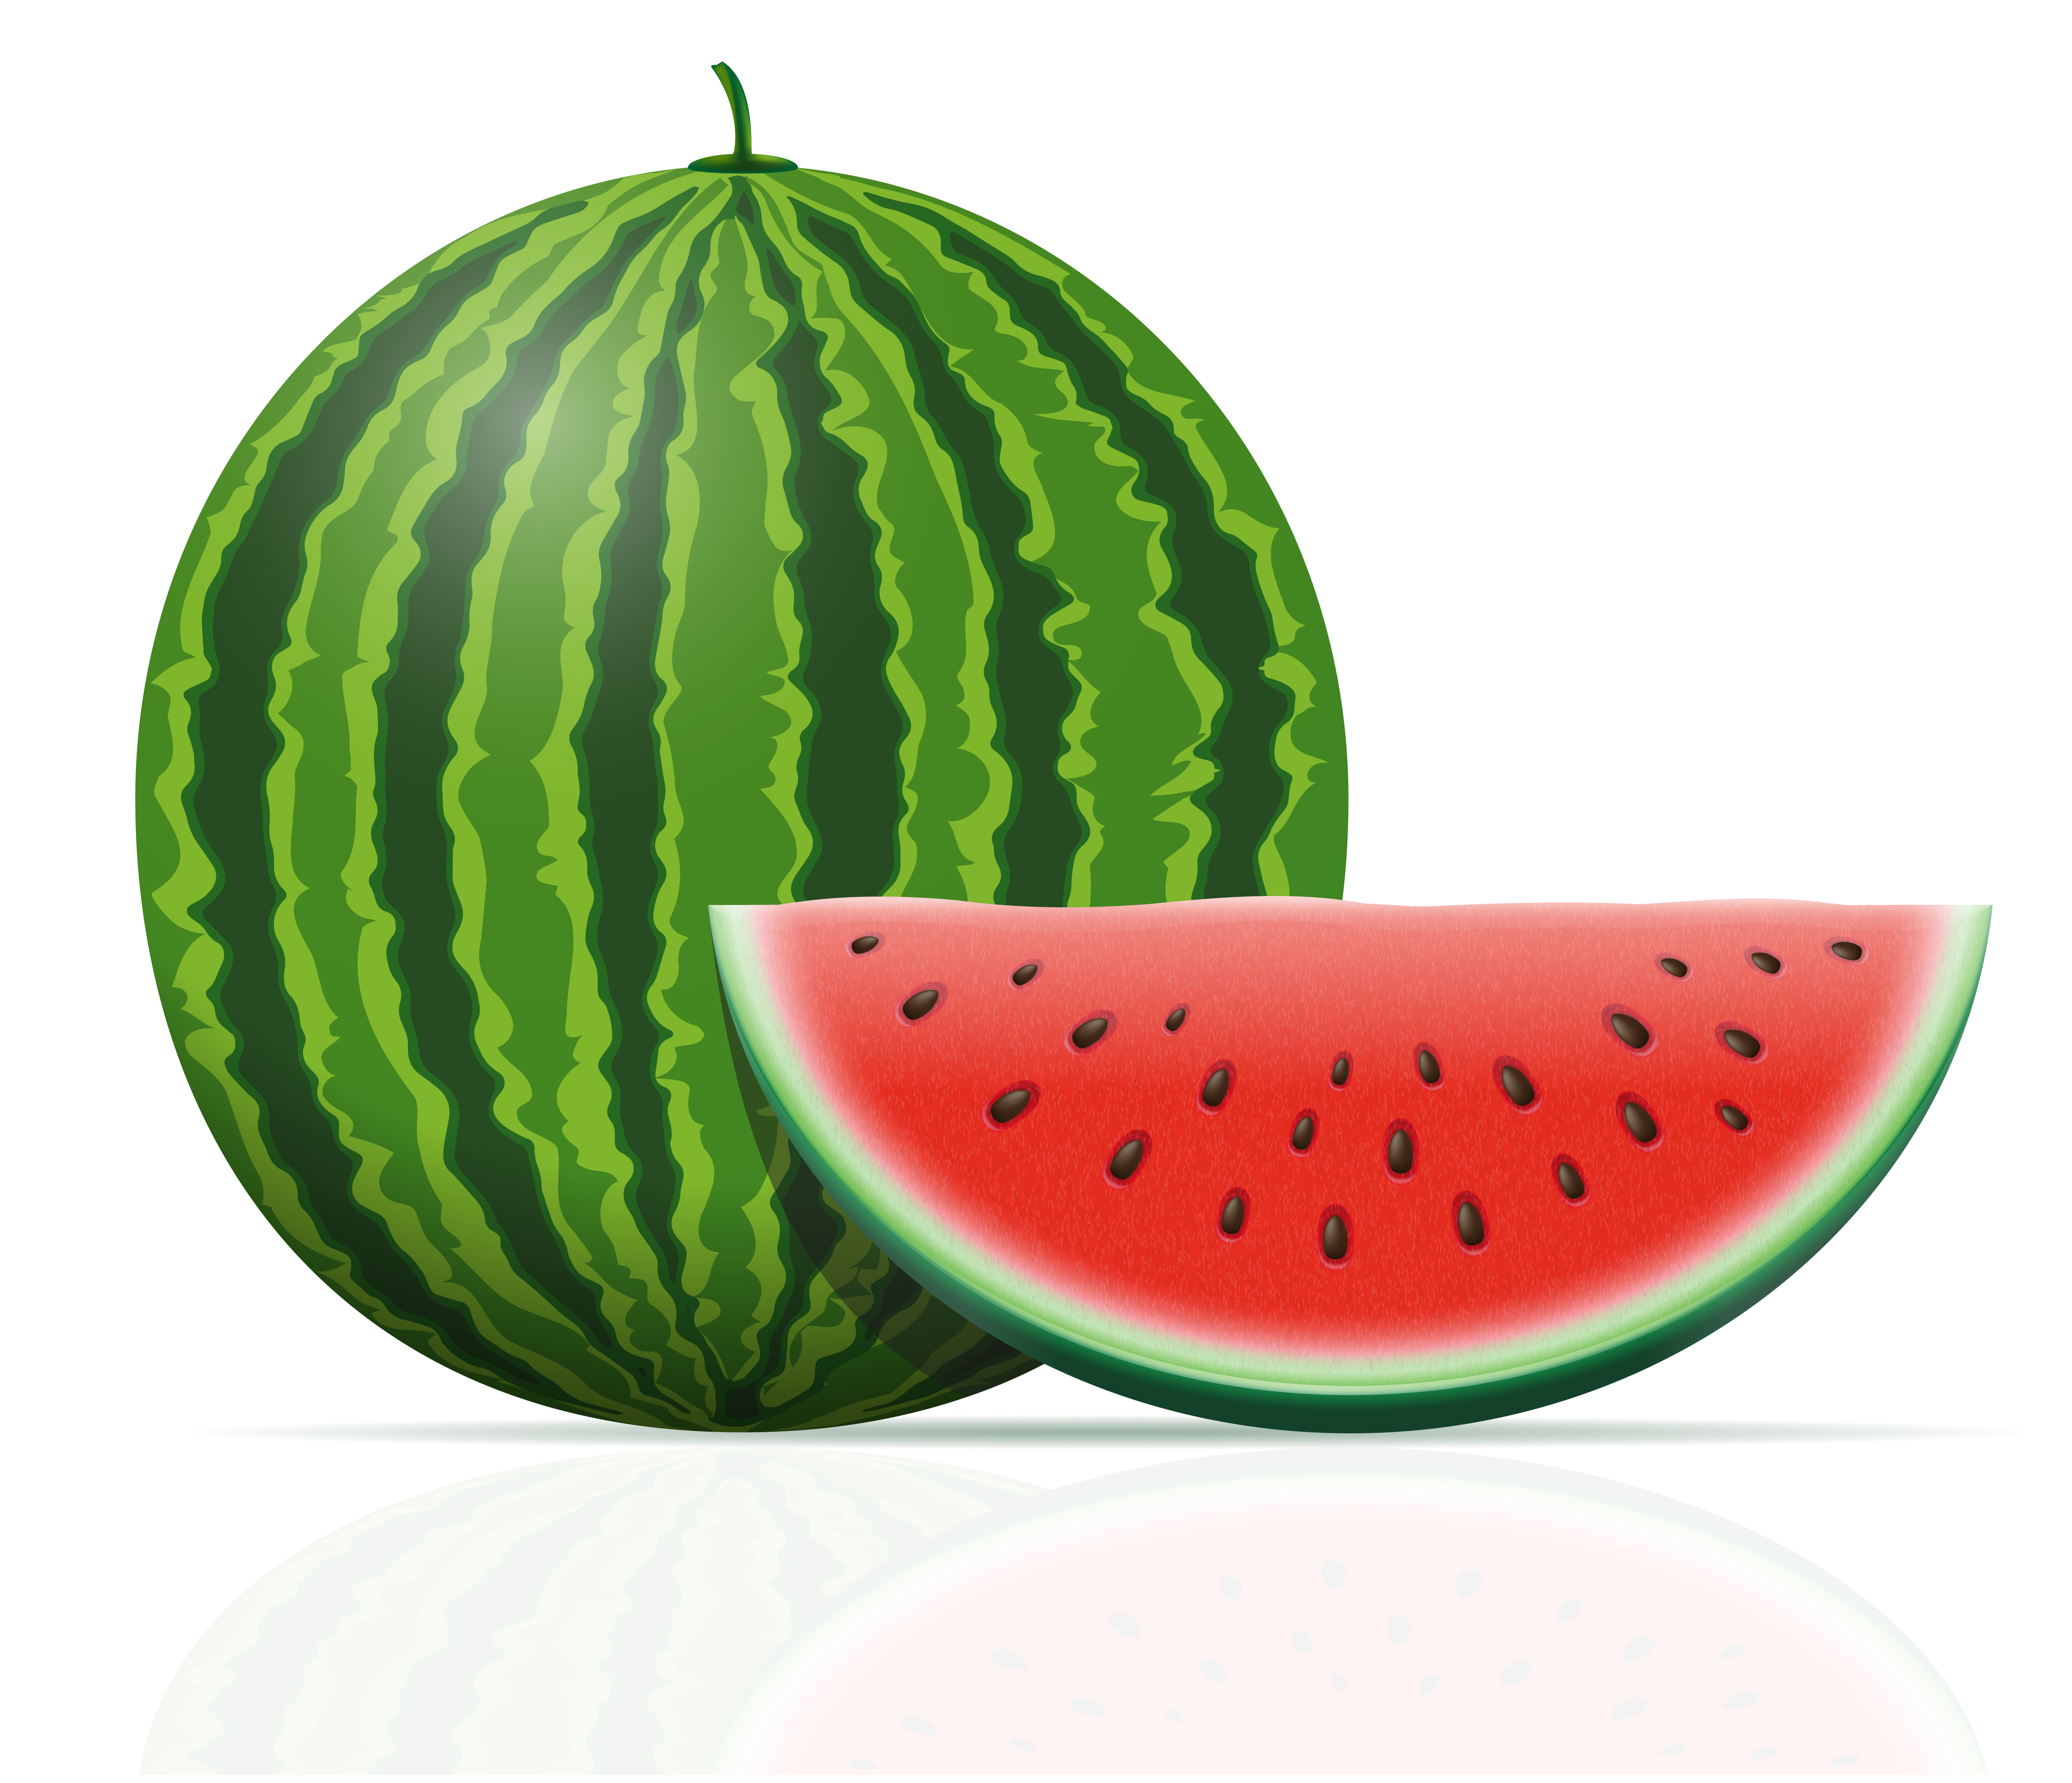 watermelon-ripe-juicy-vector-illustration-493045-vector-art-at-vecteezy